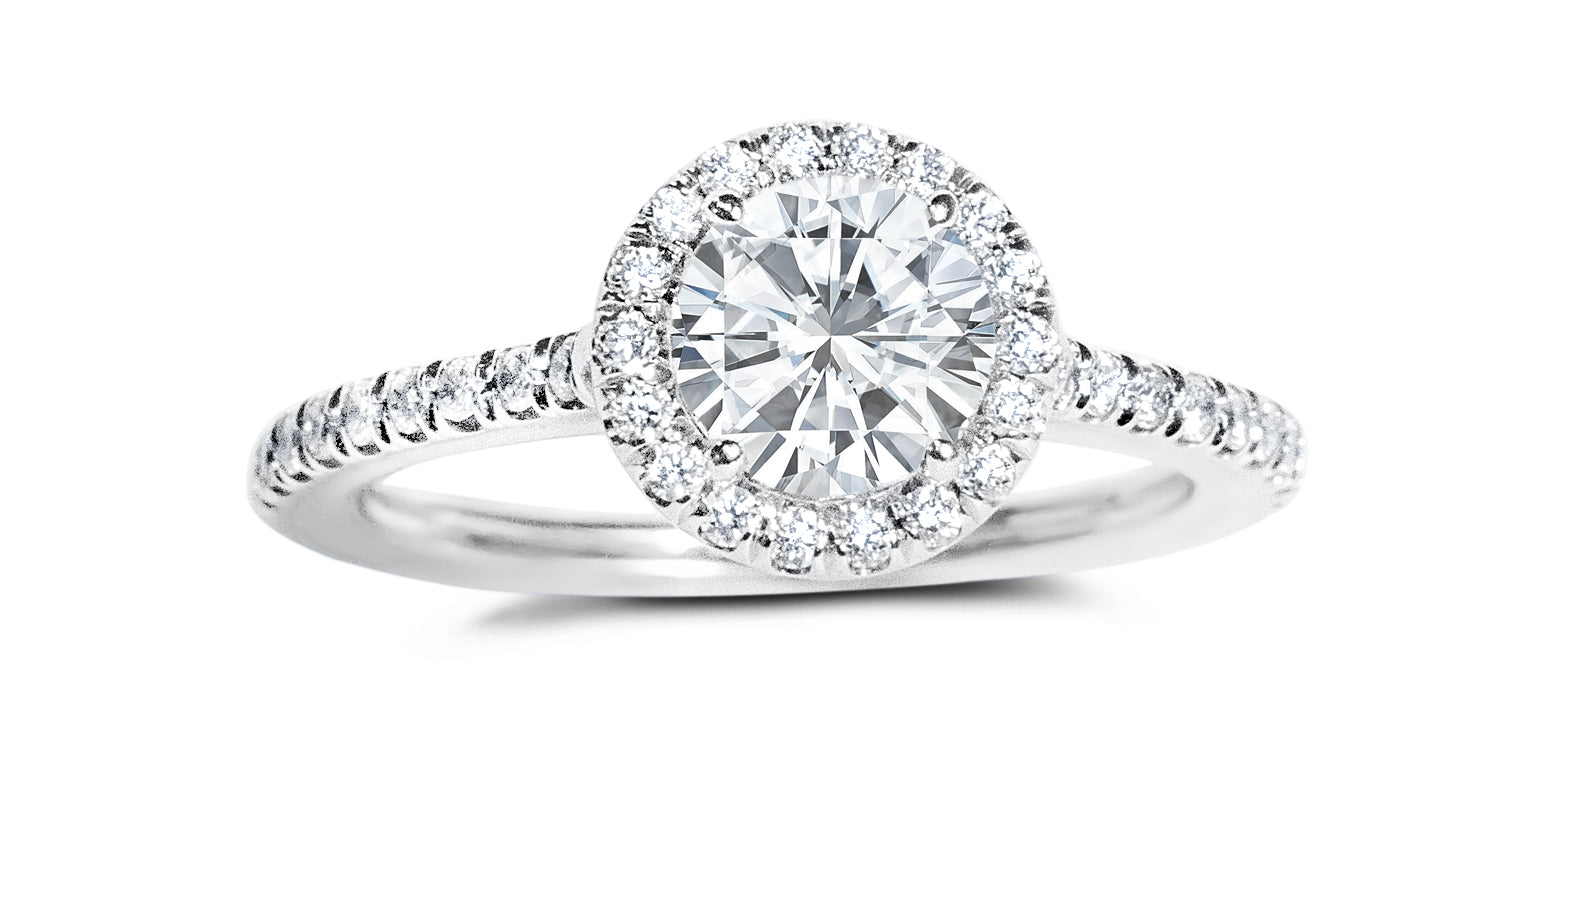 "Julianna" Engagement Ring